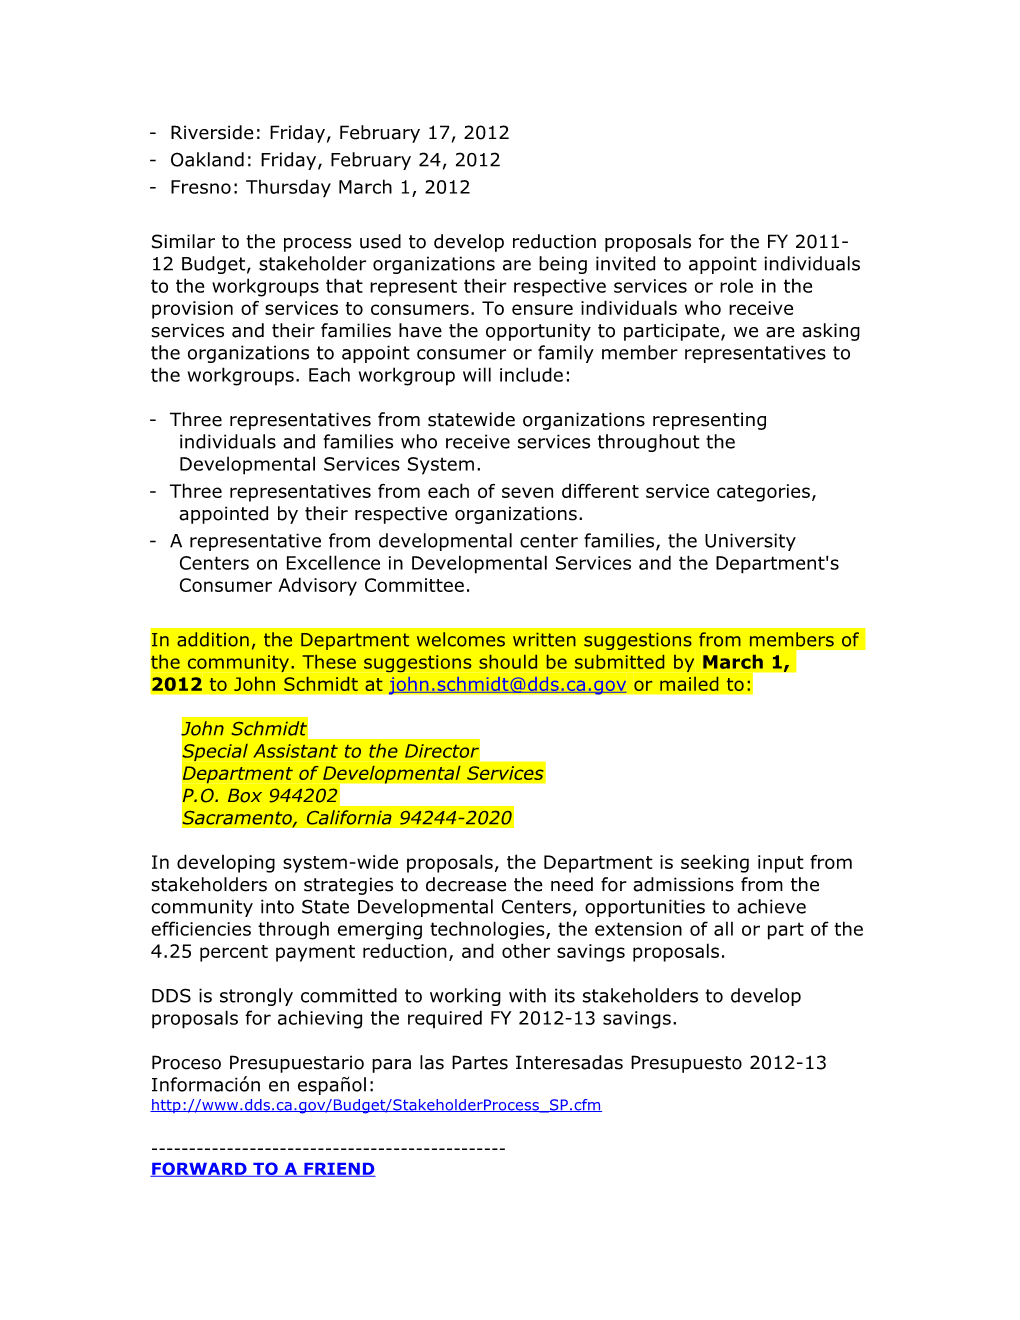 EFRC Action Alert February 21, 2012